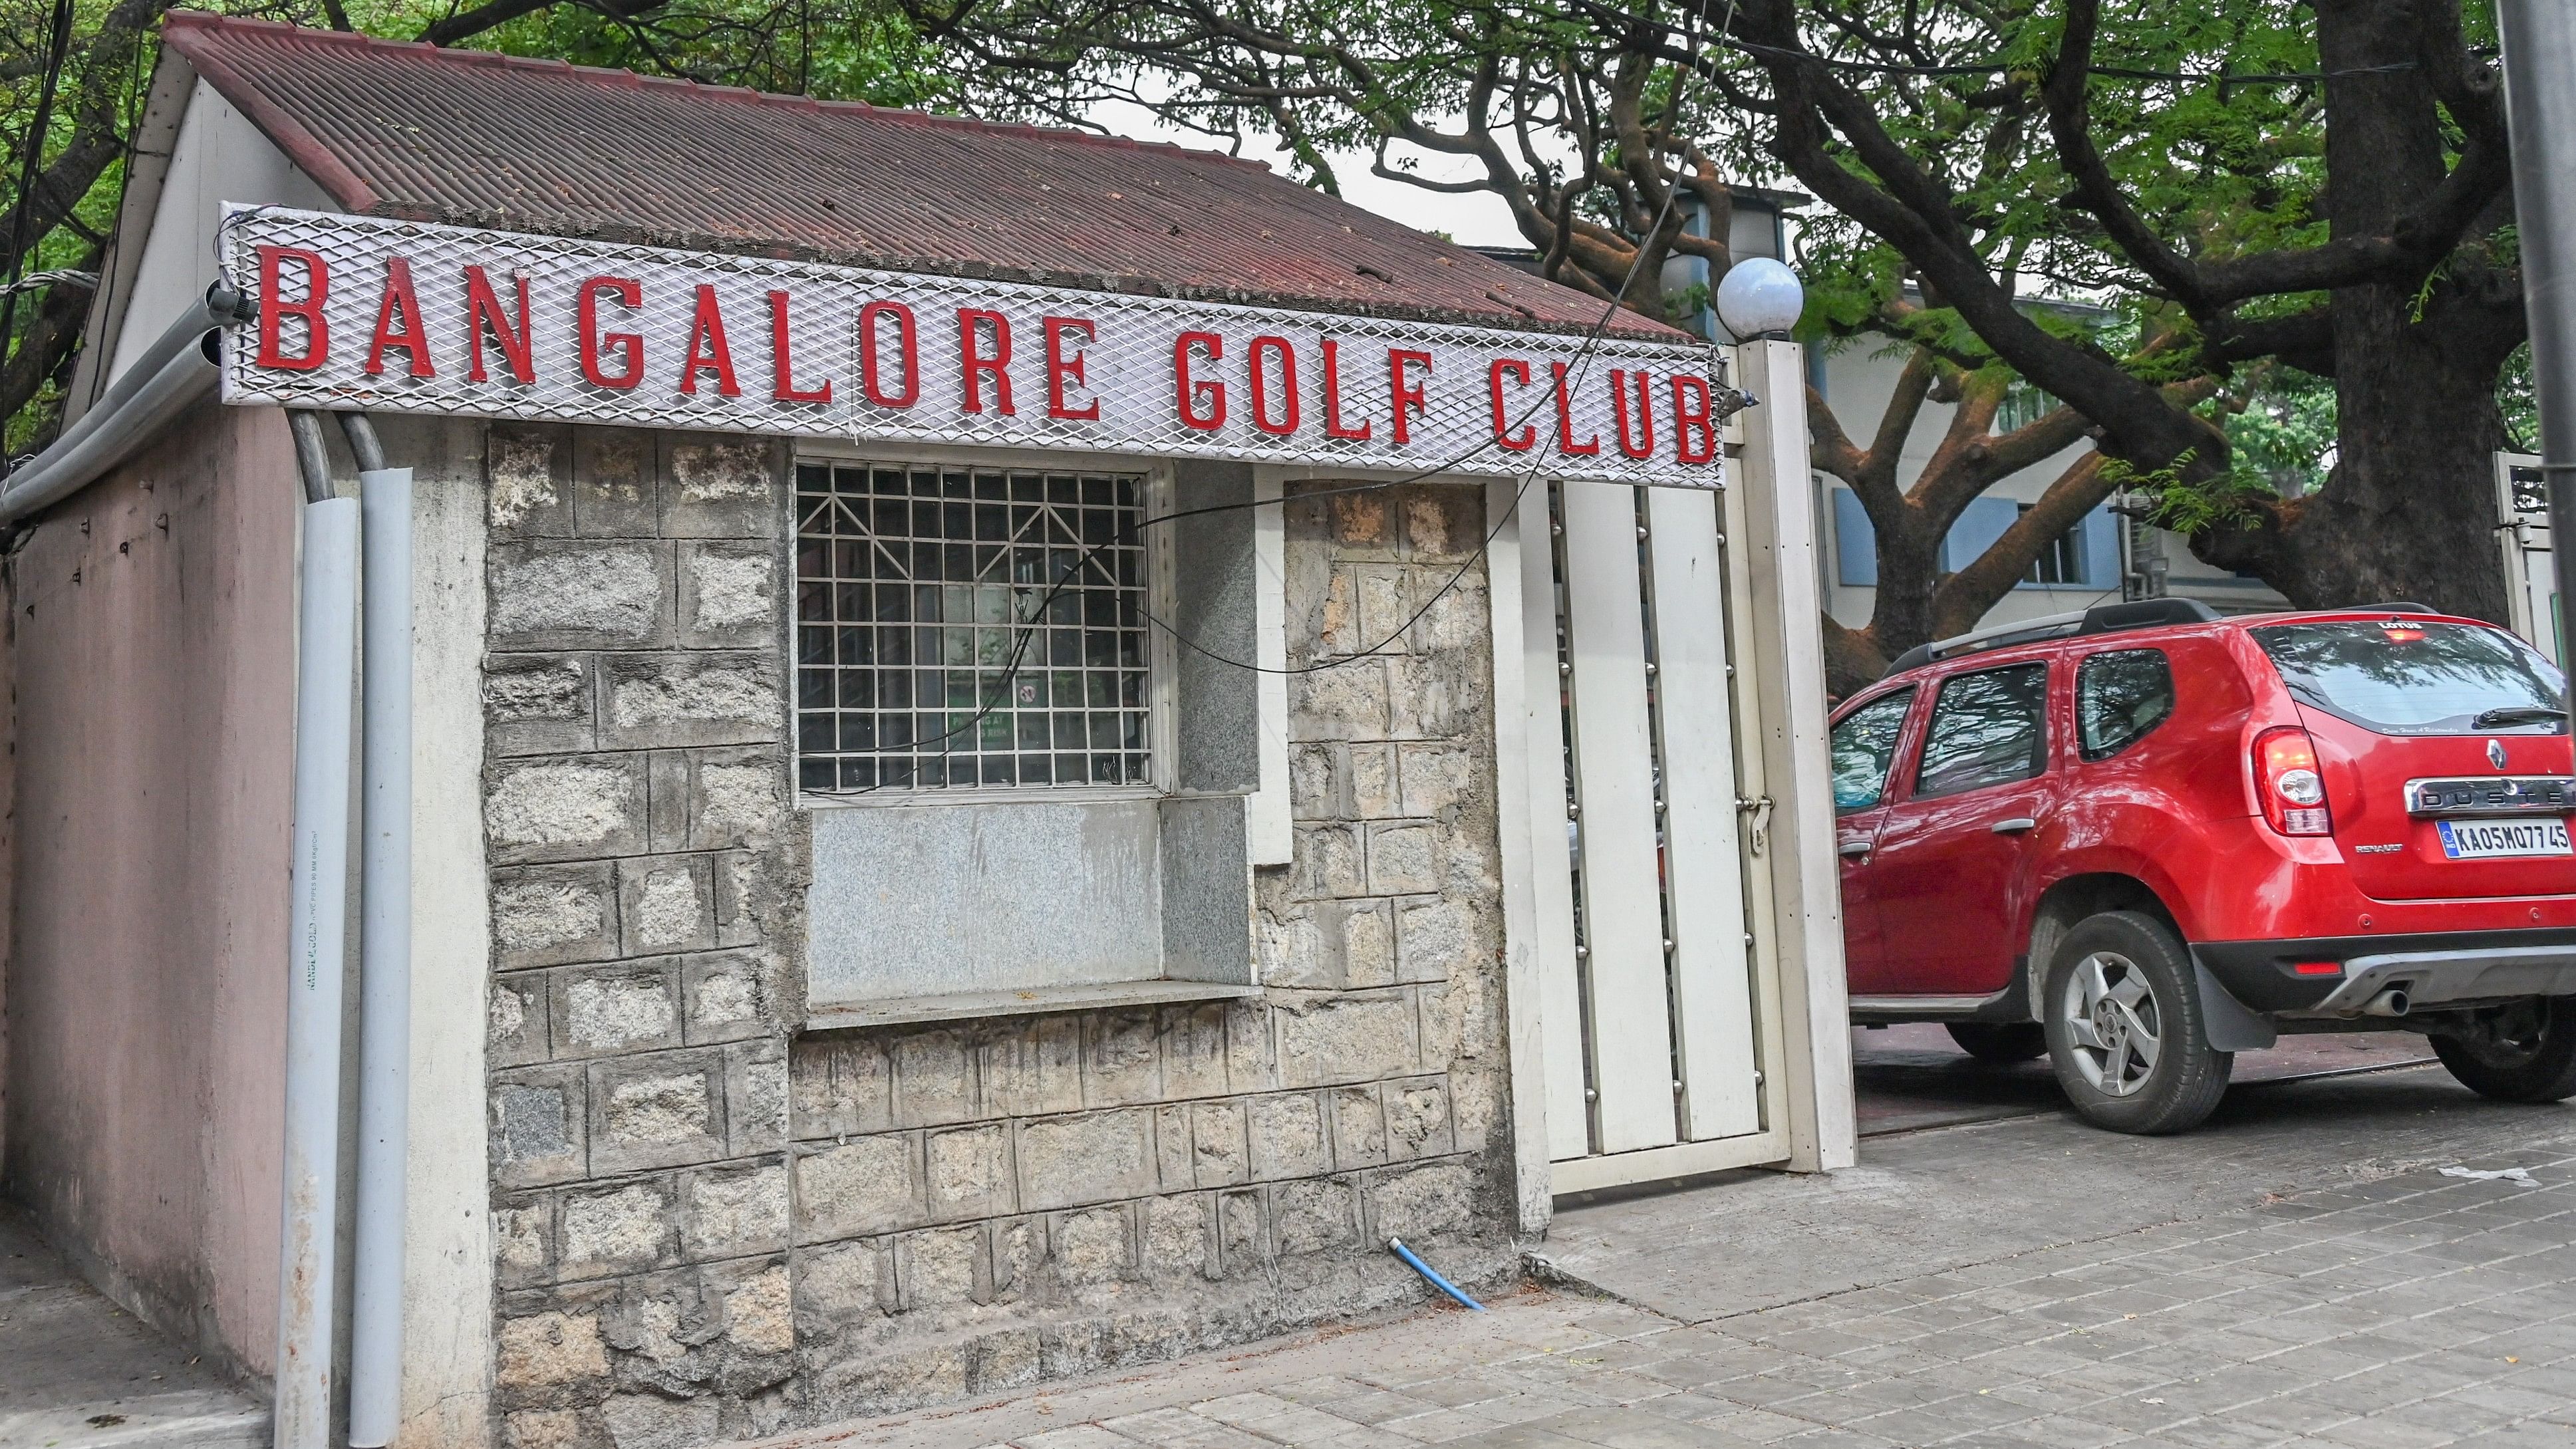 <div class="paragraphs"><p>The Bangalore Golf Club (BGC) at Sankey Road. </p></div>